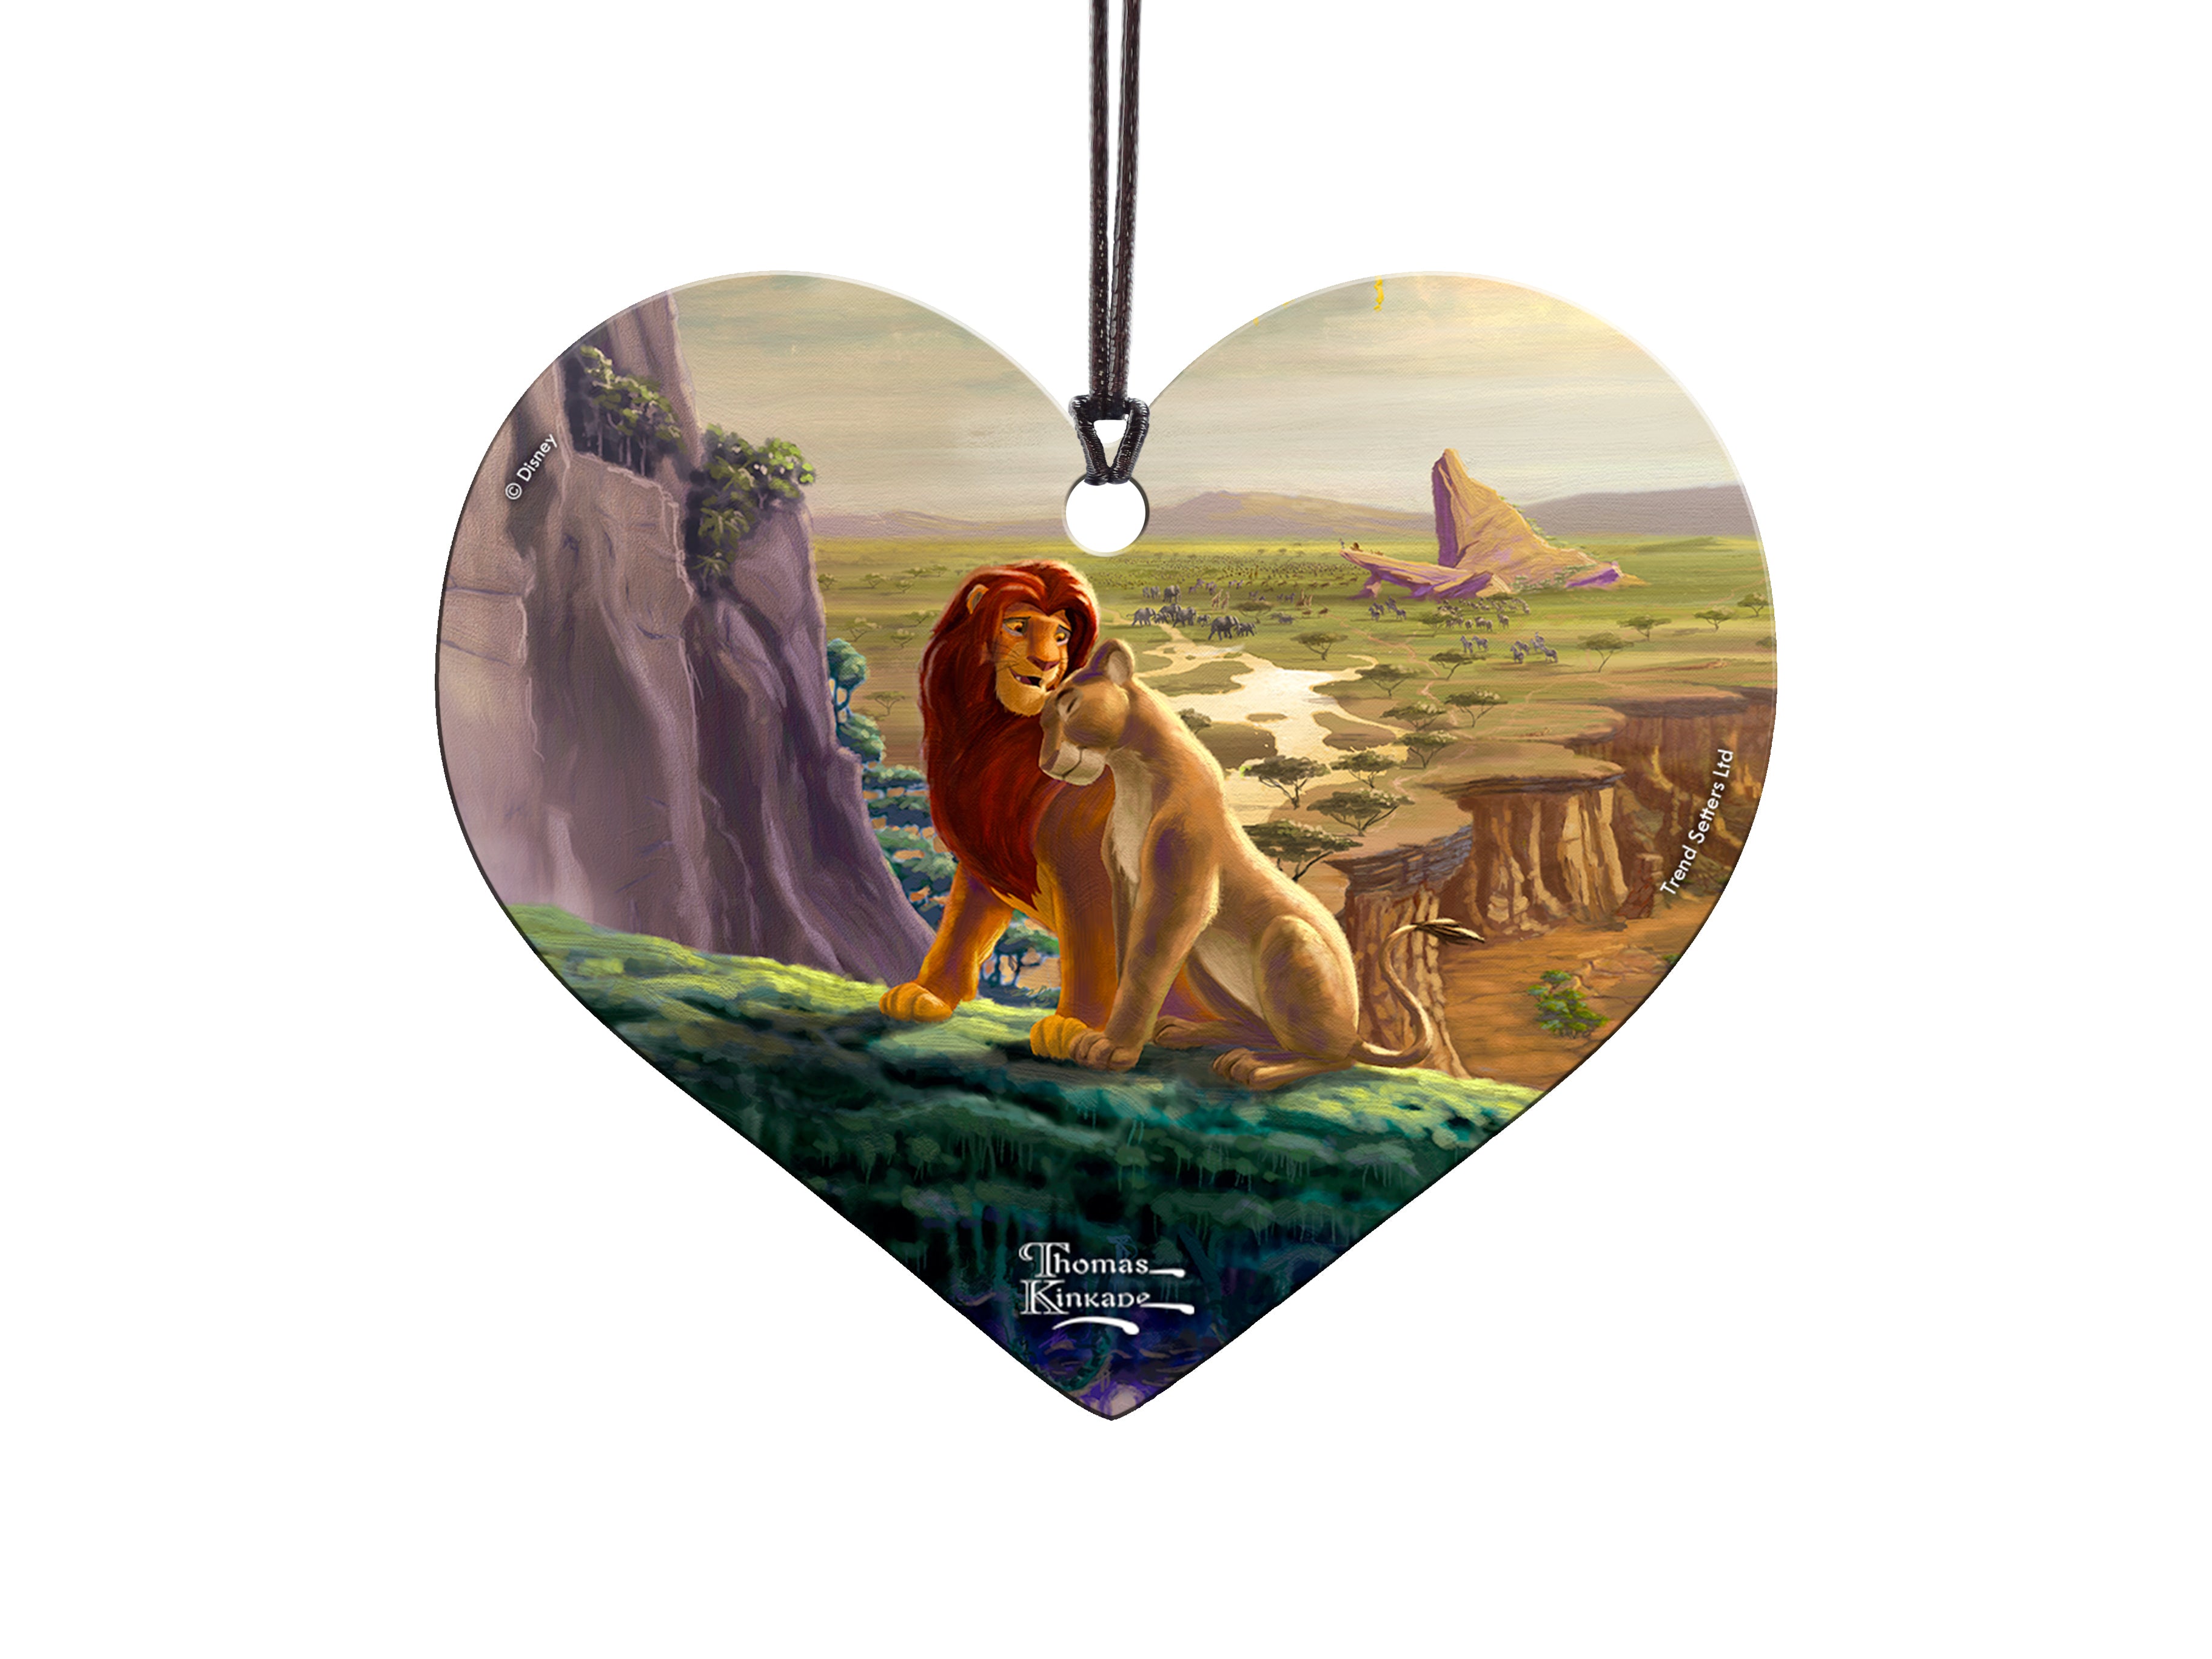 Disney (The Lion King Return to Pride Rock - Simba and Nala) Hanging Acrylic Print ACPHEART484